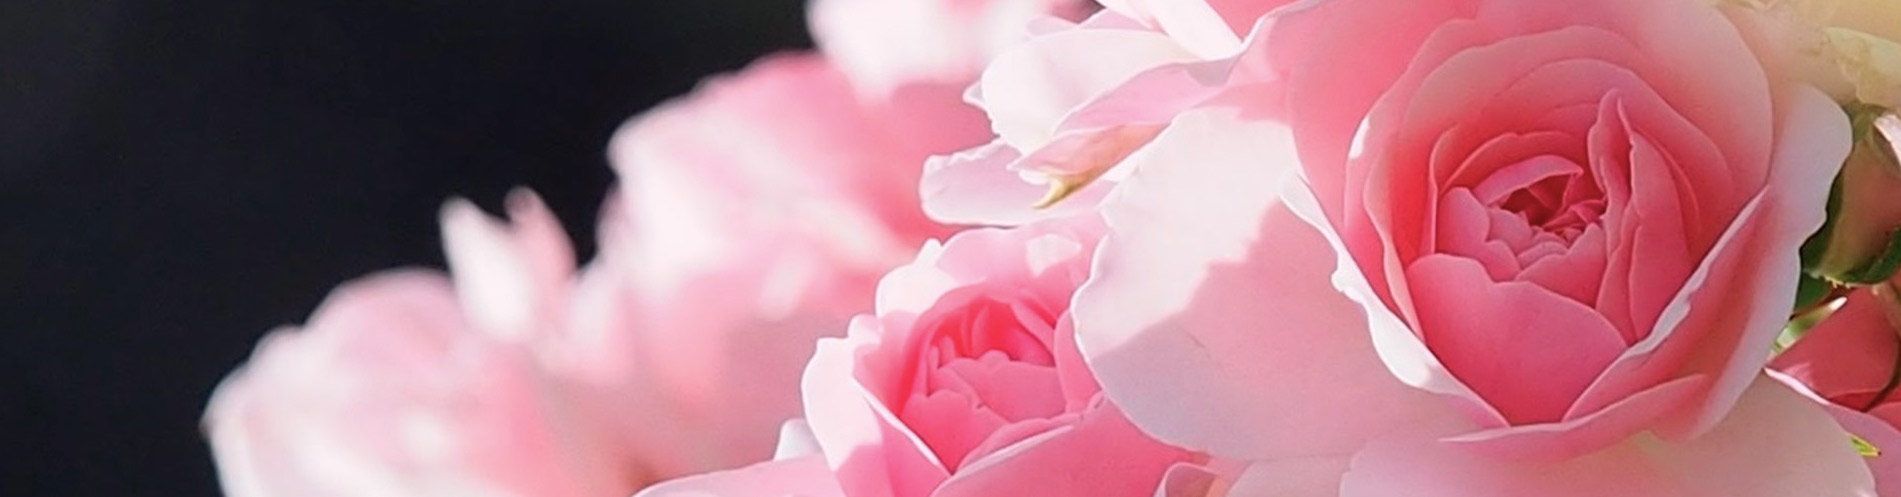 Photo de fleurs rose - Naturopathe cancer